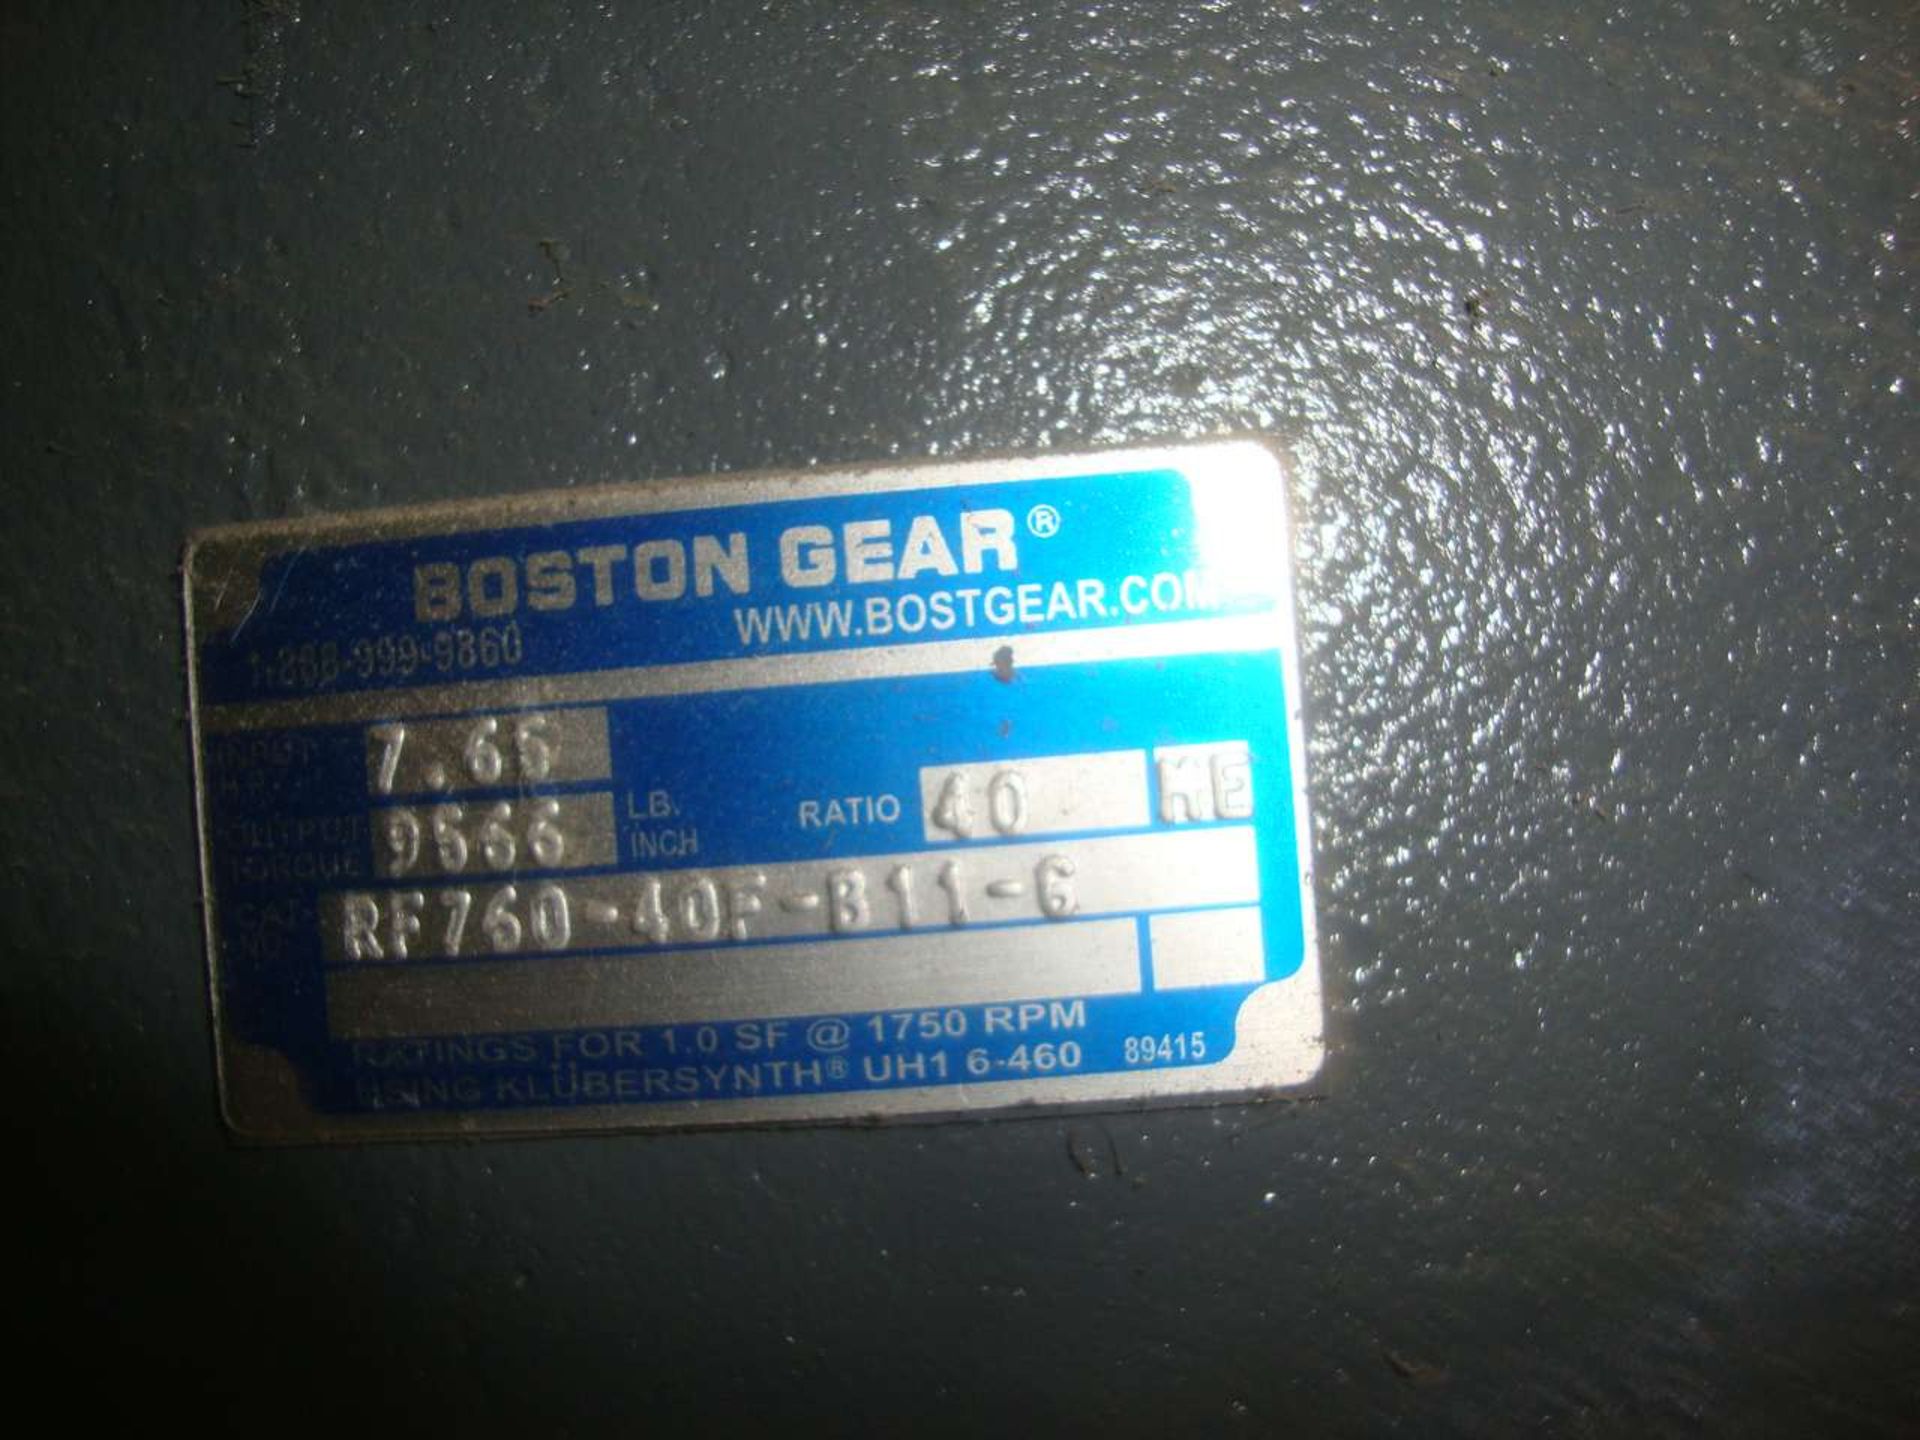 Boston Gear RF760-40F-B11-6 Gear Box - Image 2 of 2